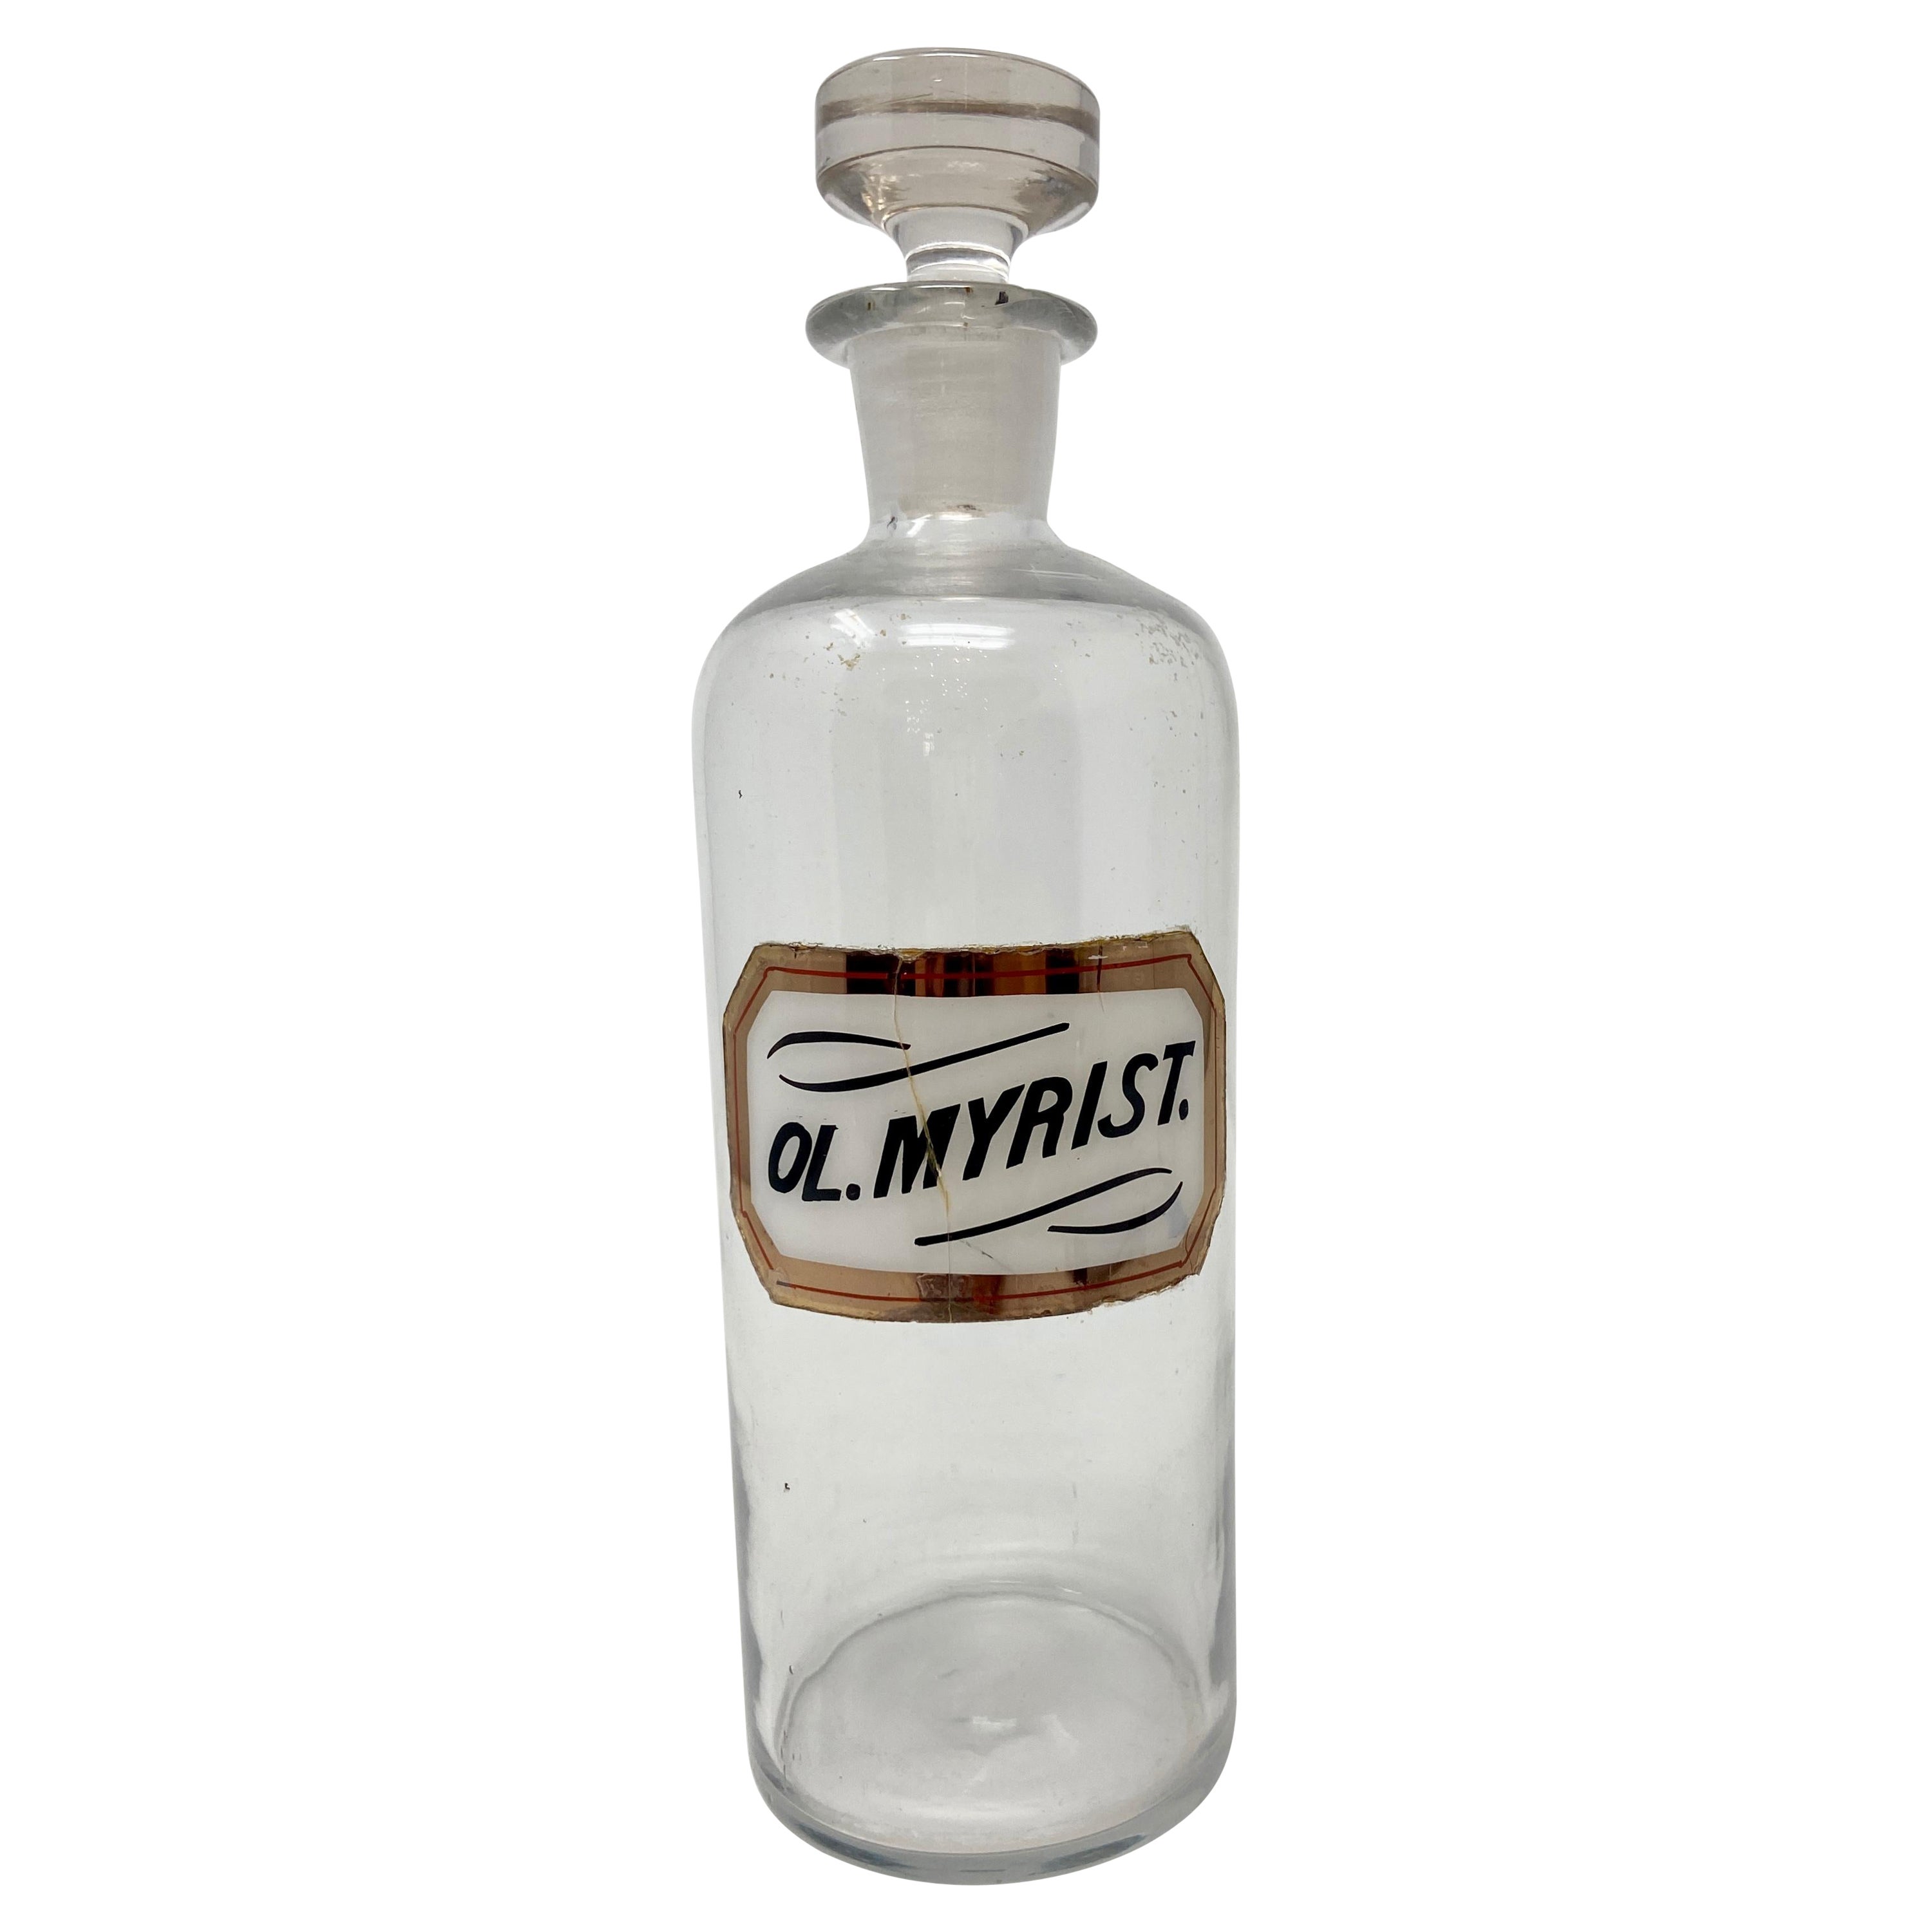 Antique Label Under Glass Apothecary Bottle